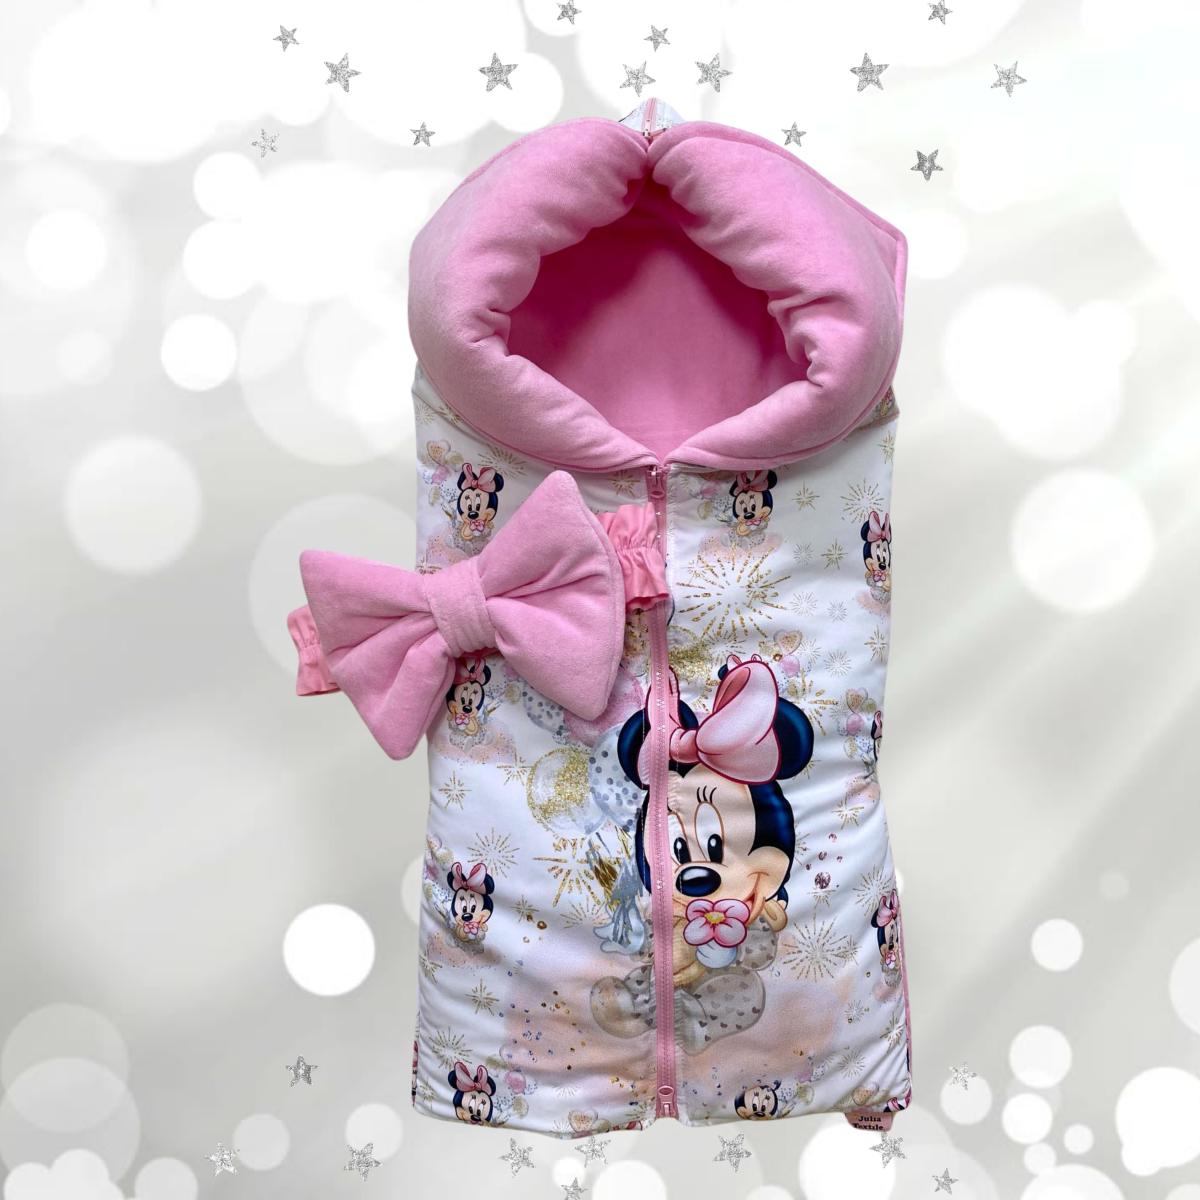 Pink and White Minnie: 4 Season Sleeping Bag for a Soft and Warm Sleep